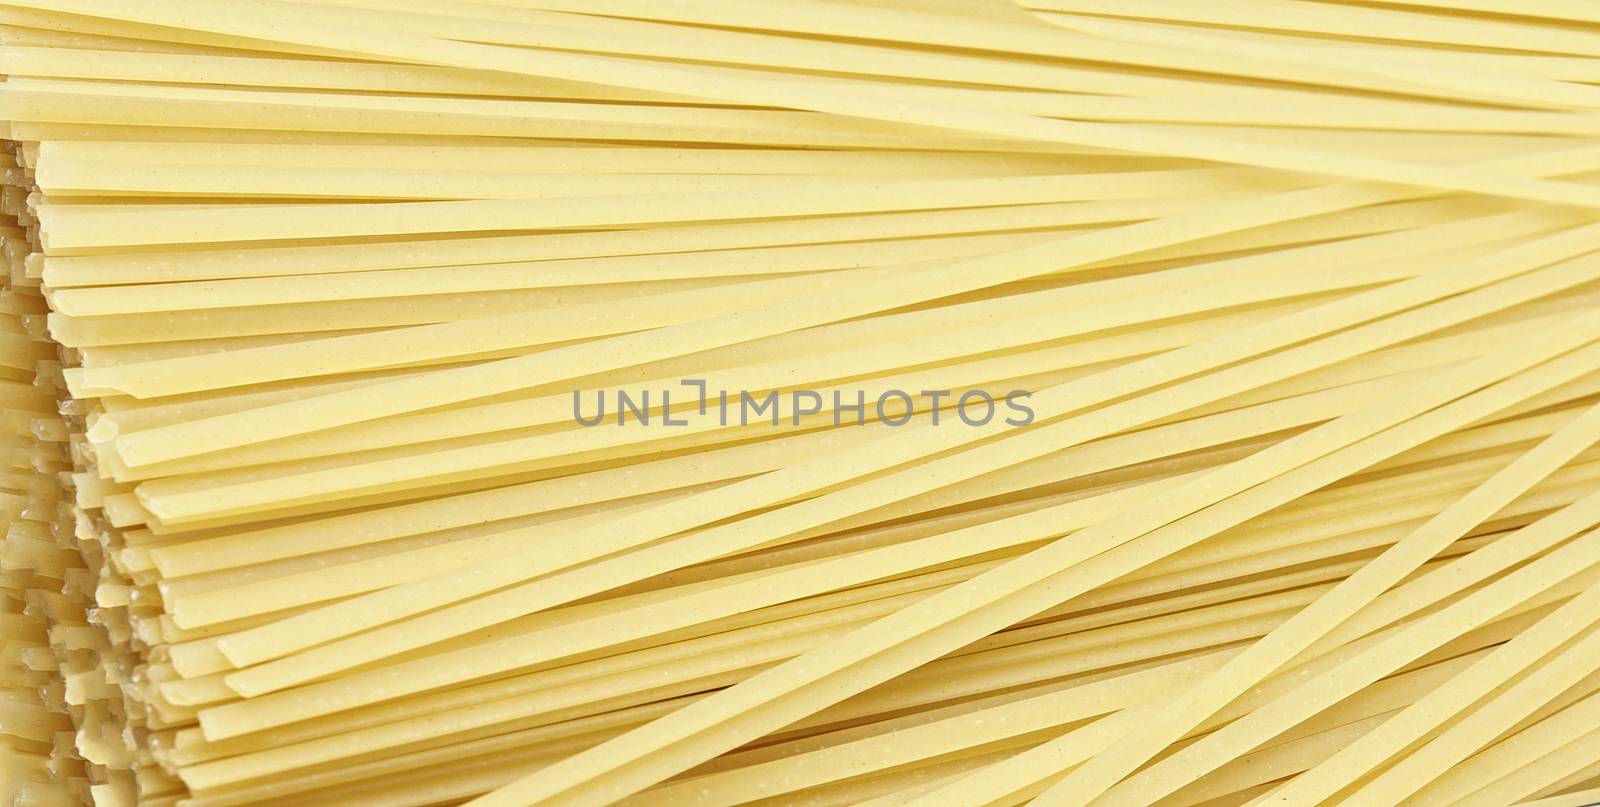 Spaghetti Texture - raw uncooked macaroni by Studia72